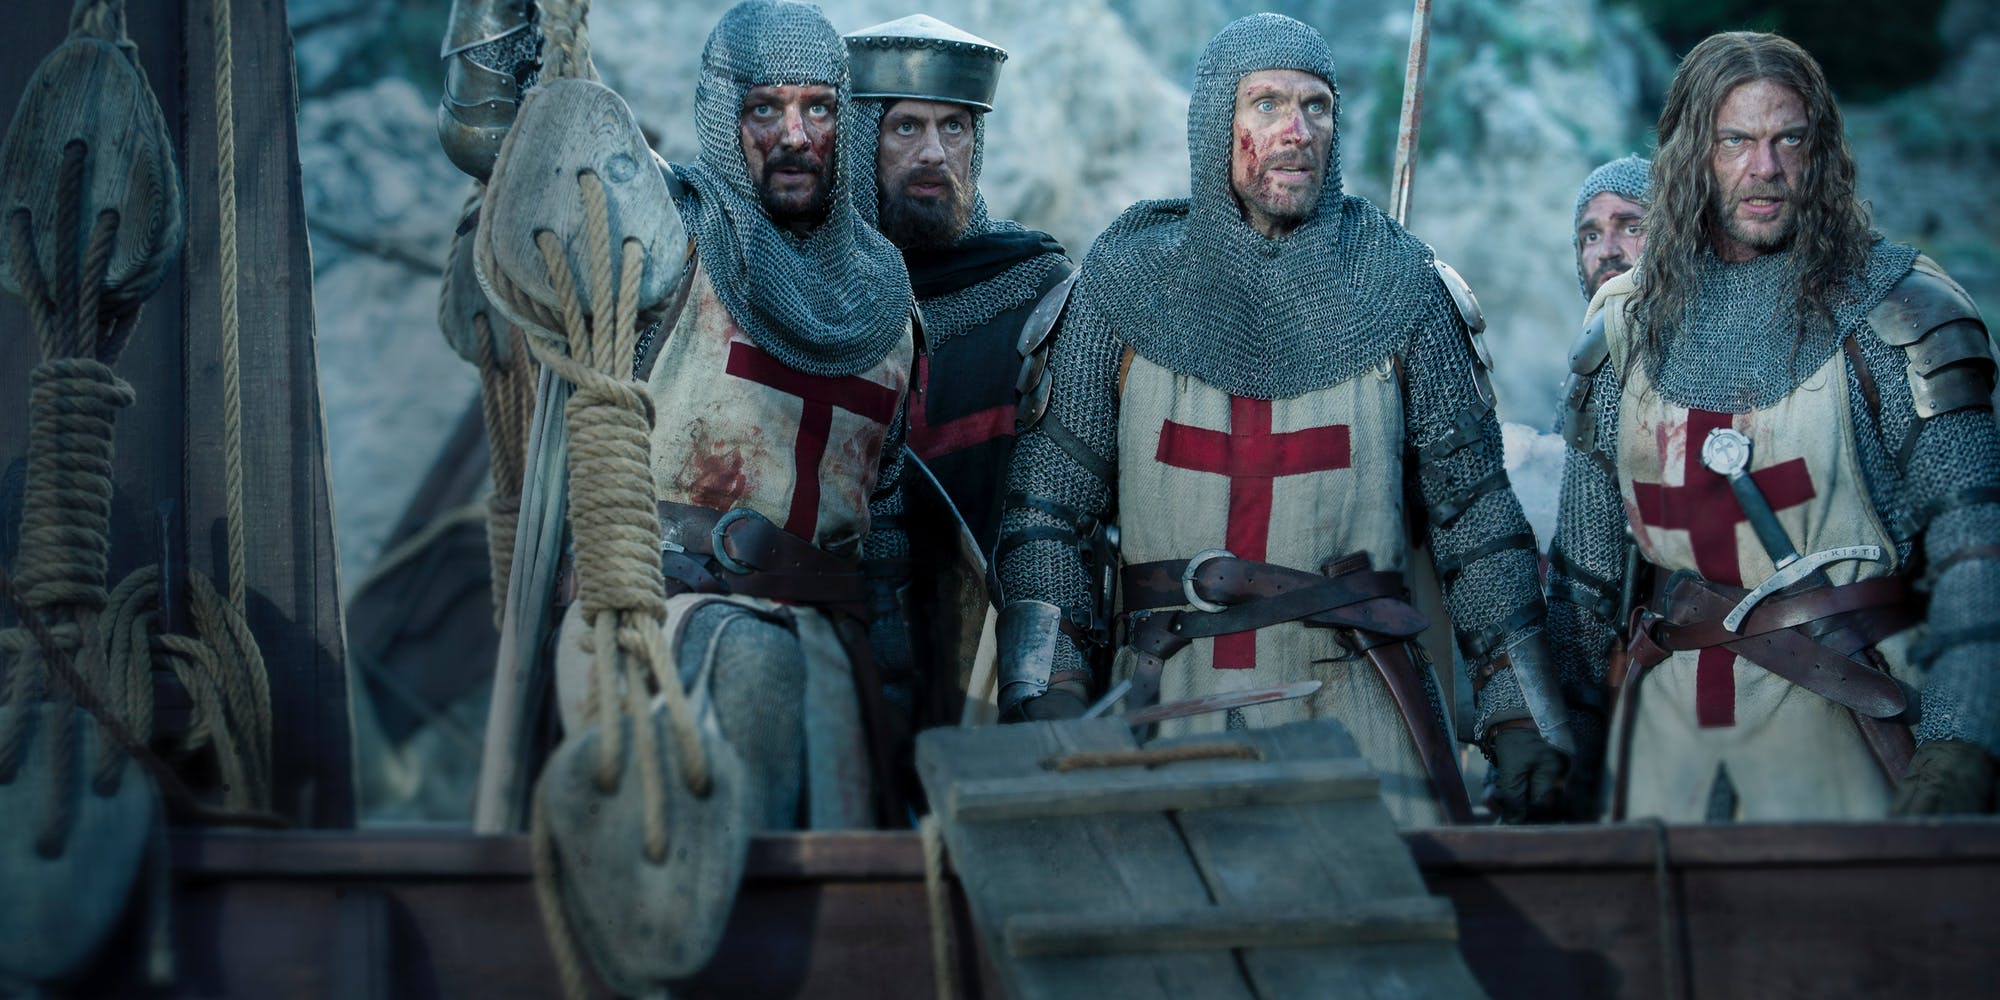 The Templars in Knightfall